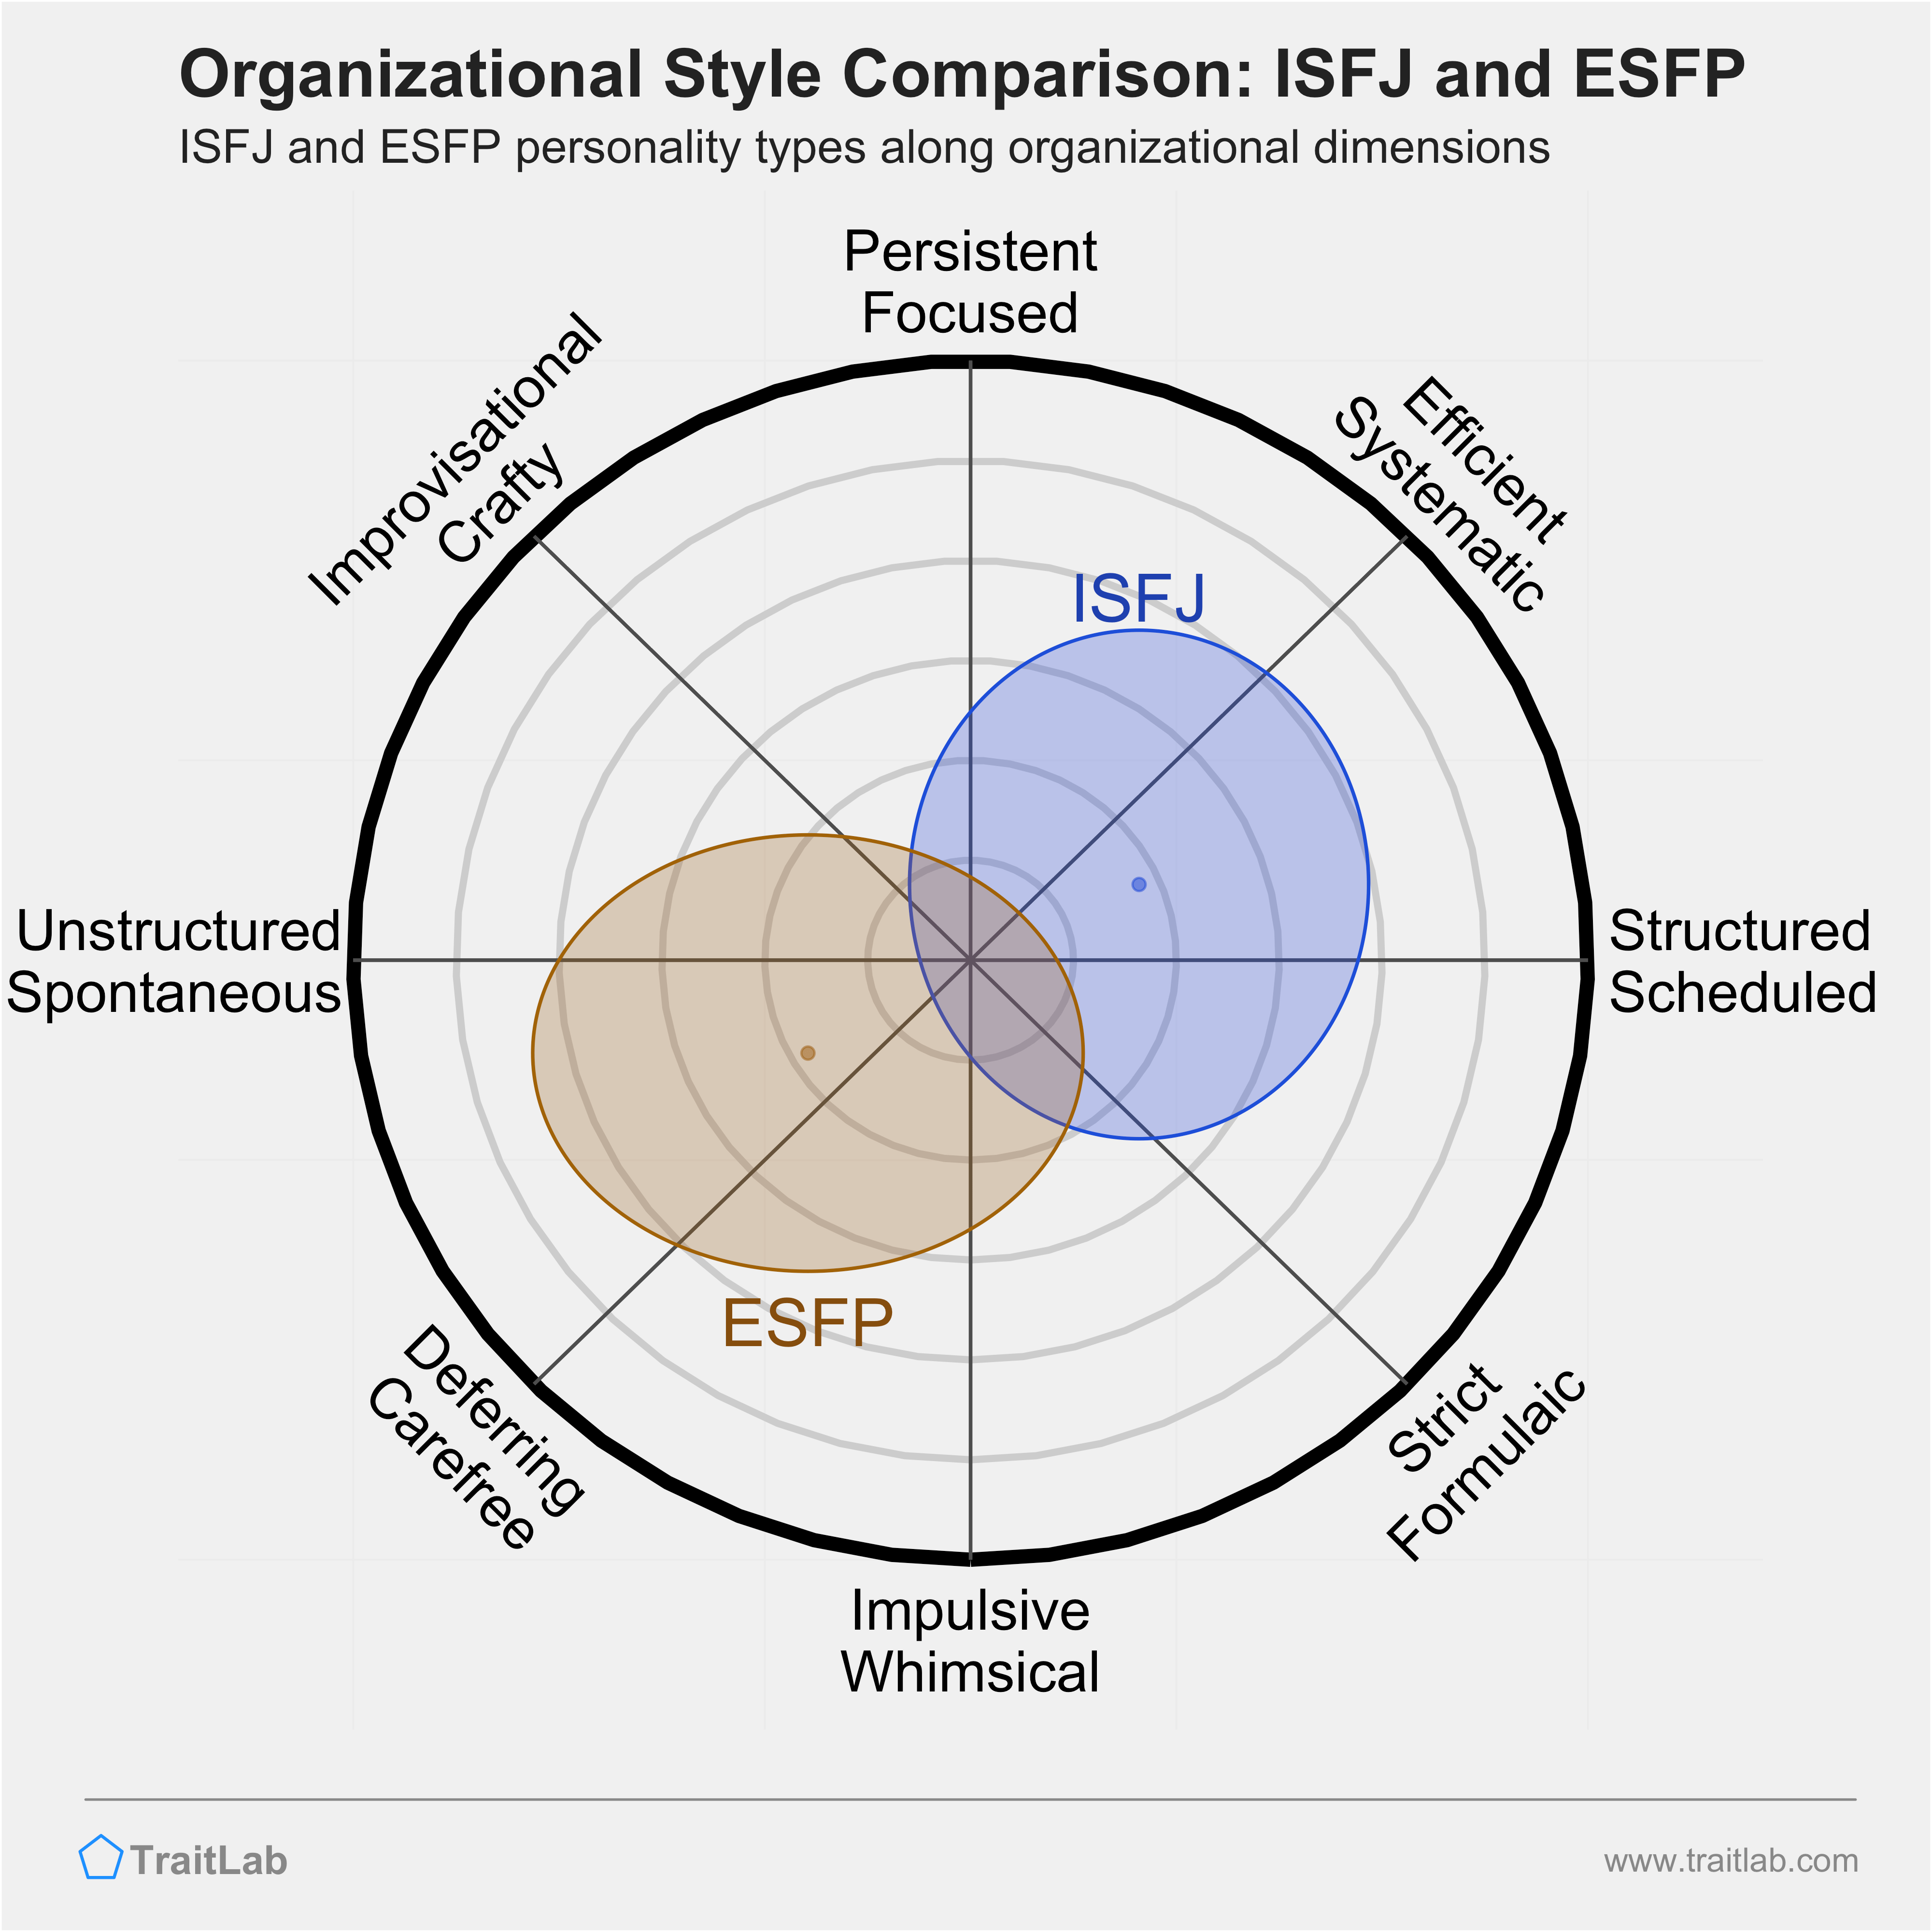 ISFJ and ESFP comparison across organizational dimensions